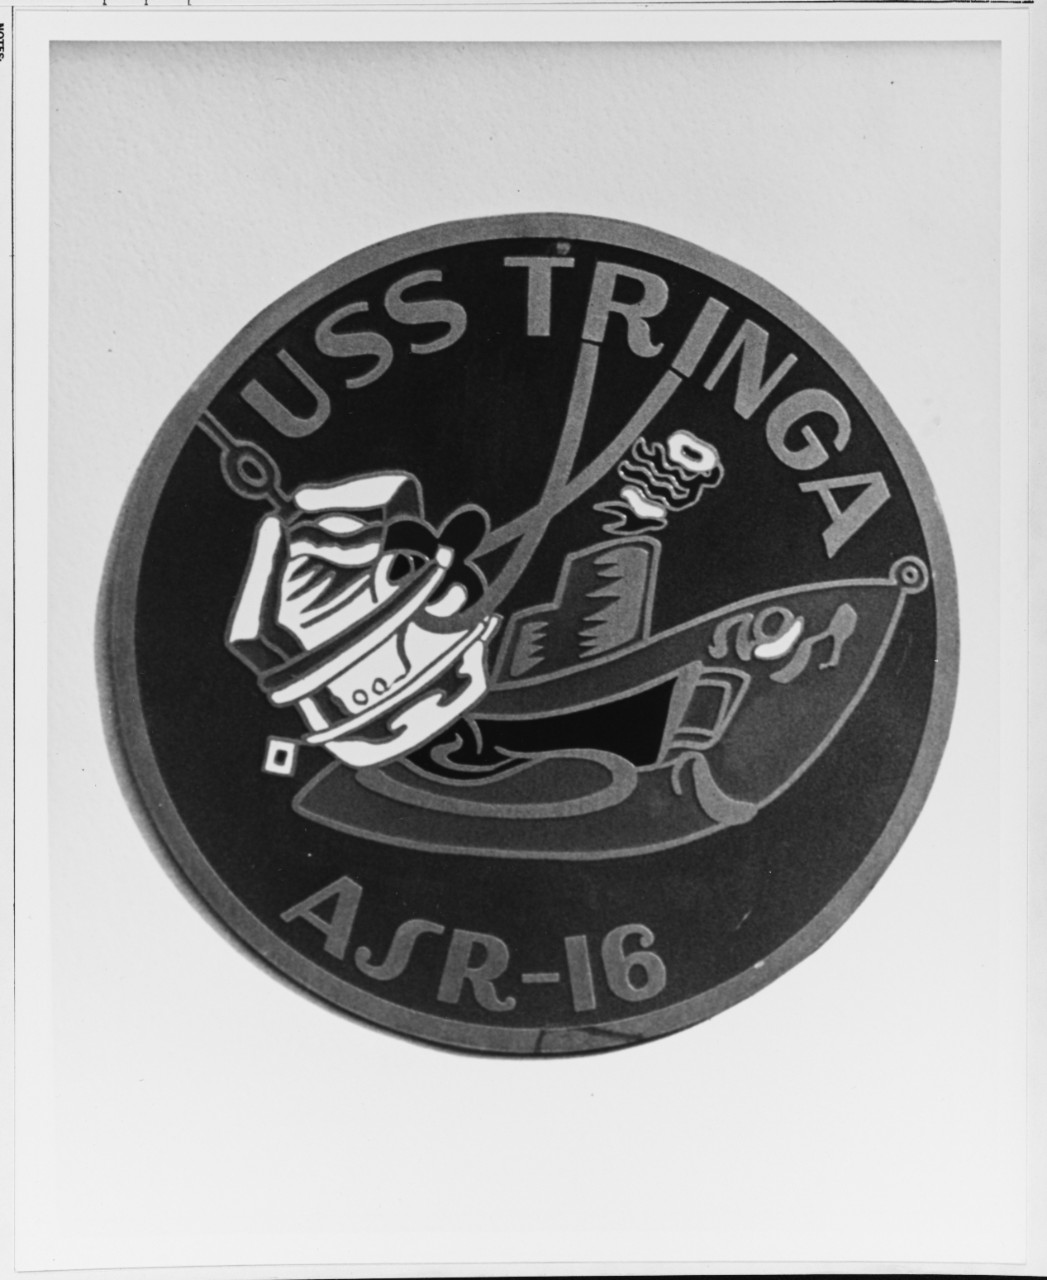 Insignia:  USS TRINGA (ASR-16)